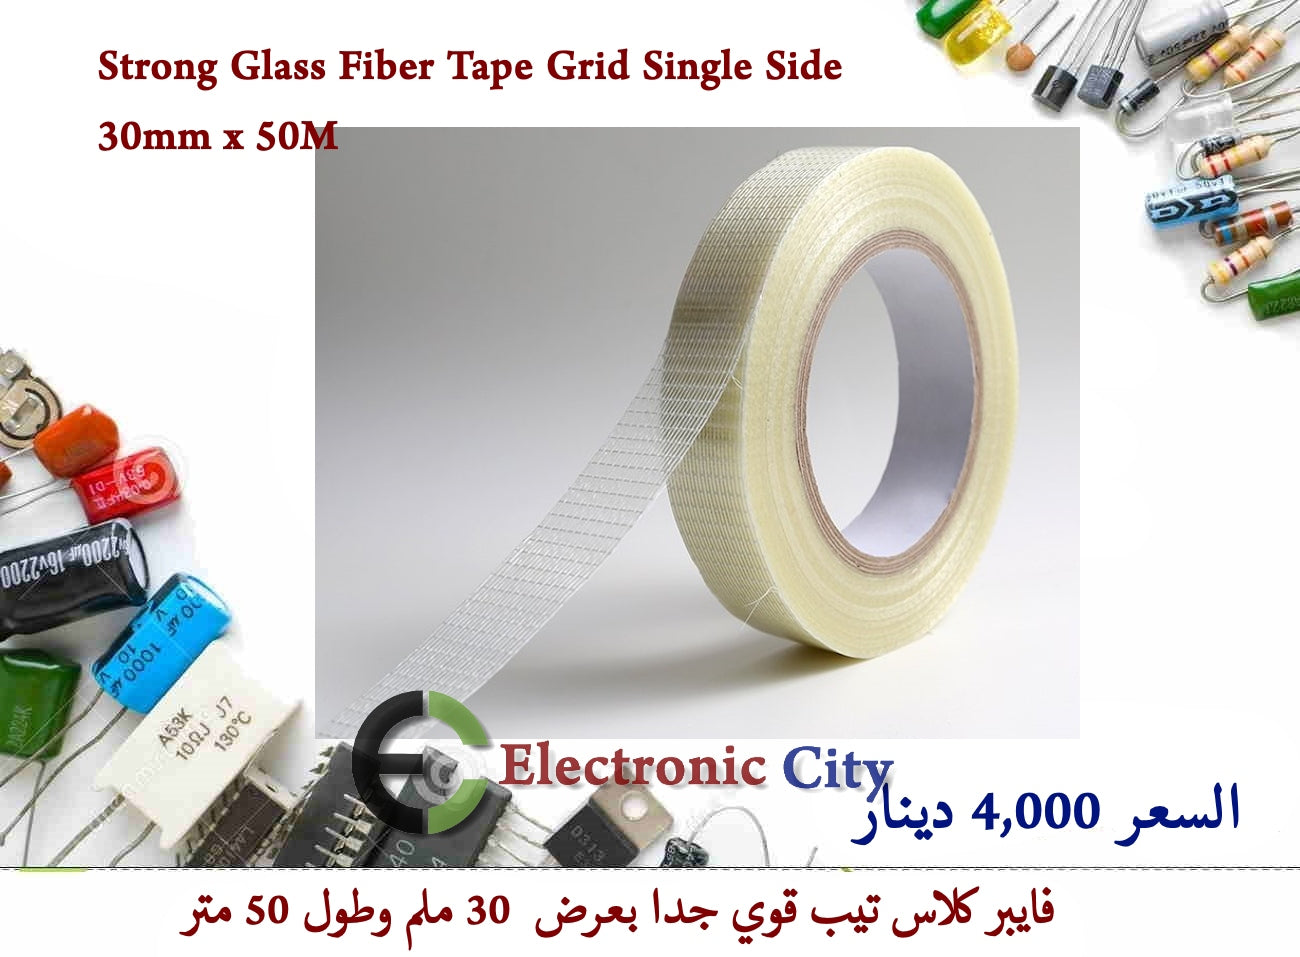 Strong Glass Fiber Tape Grid Single Side 30mm x 50M